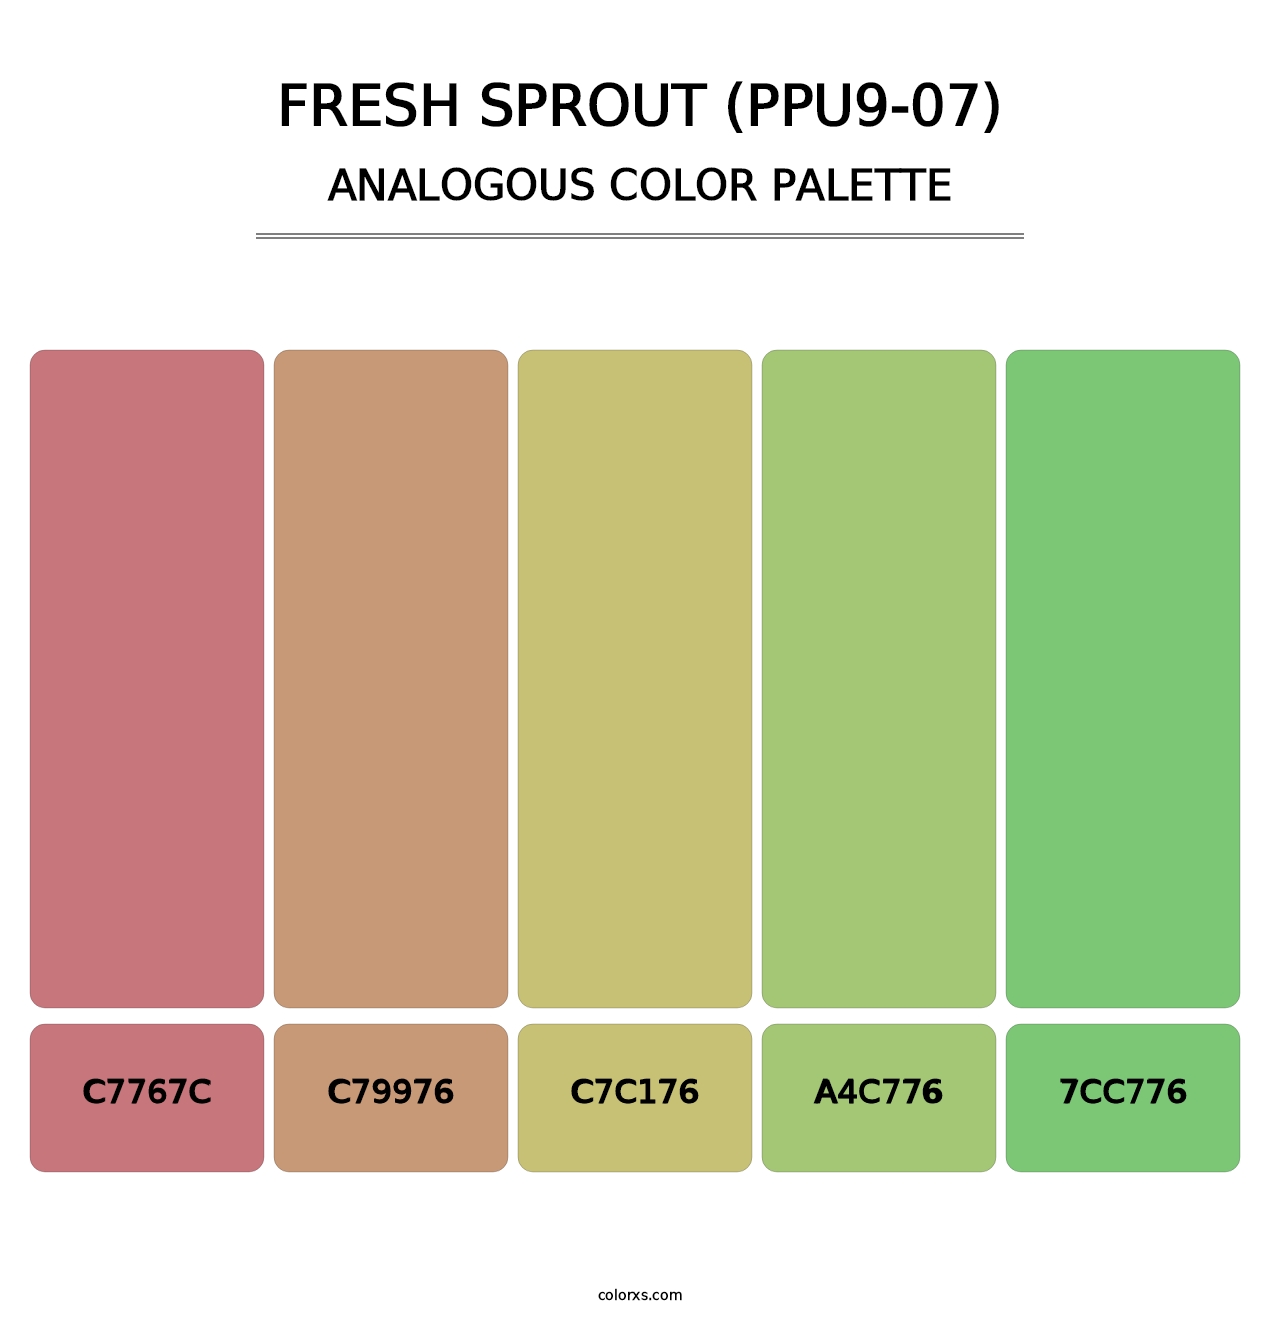 Fresh Sprout (PPU9-07) - Analogous Color Palette